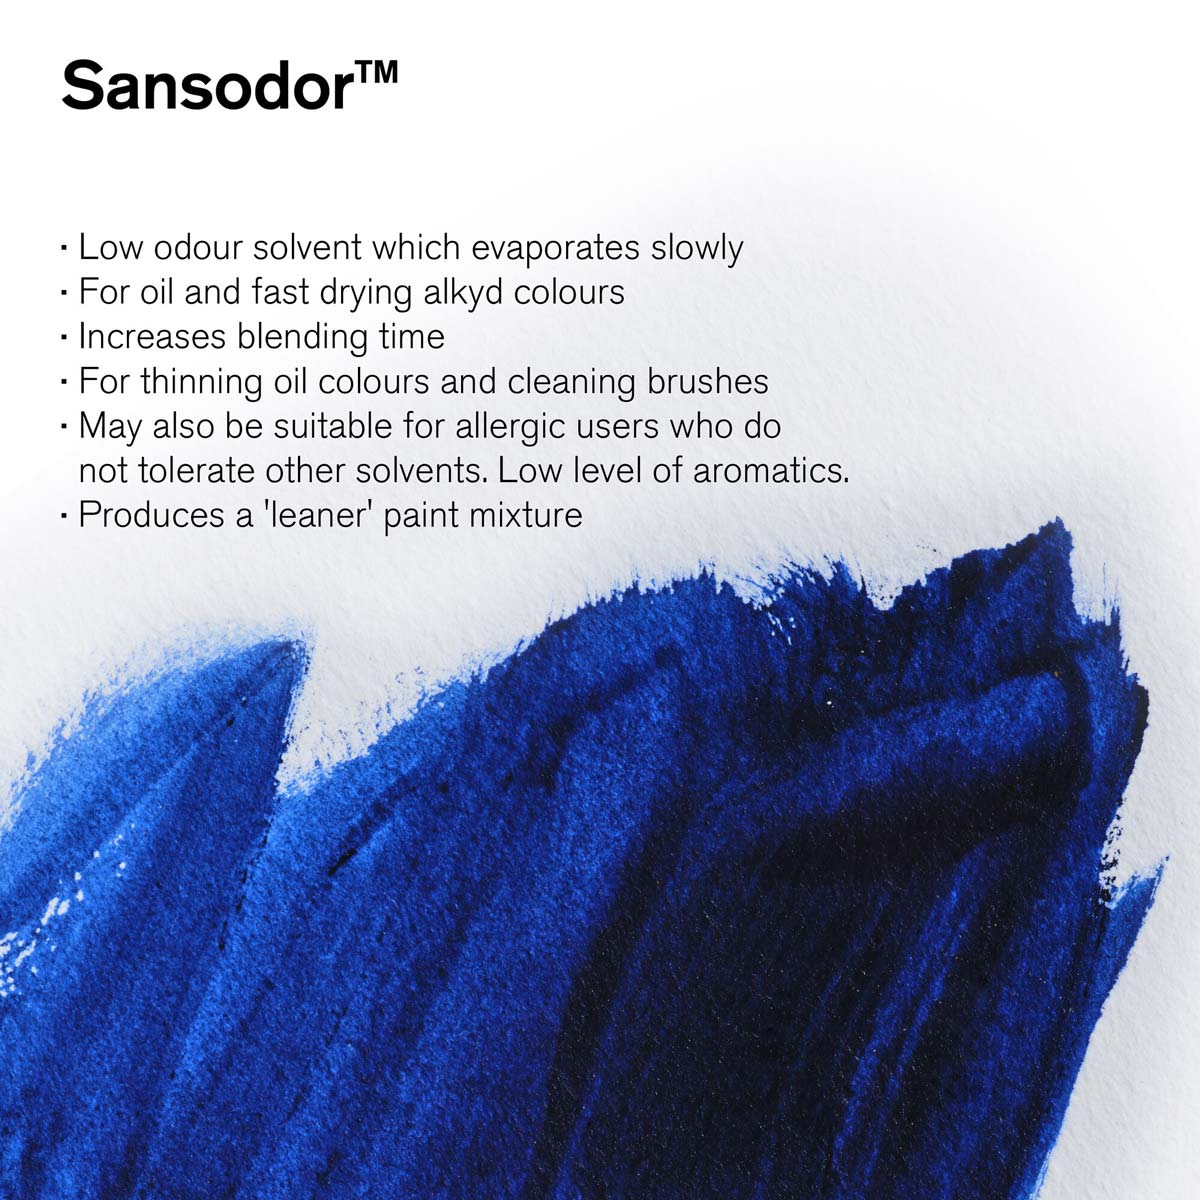 Winsor en Newton - Sansodor Low Odor Solvent Cleaner - 75ml -